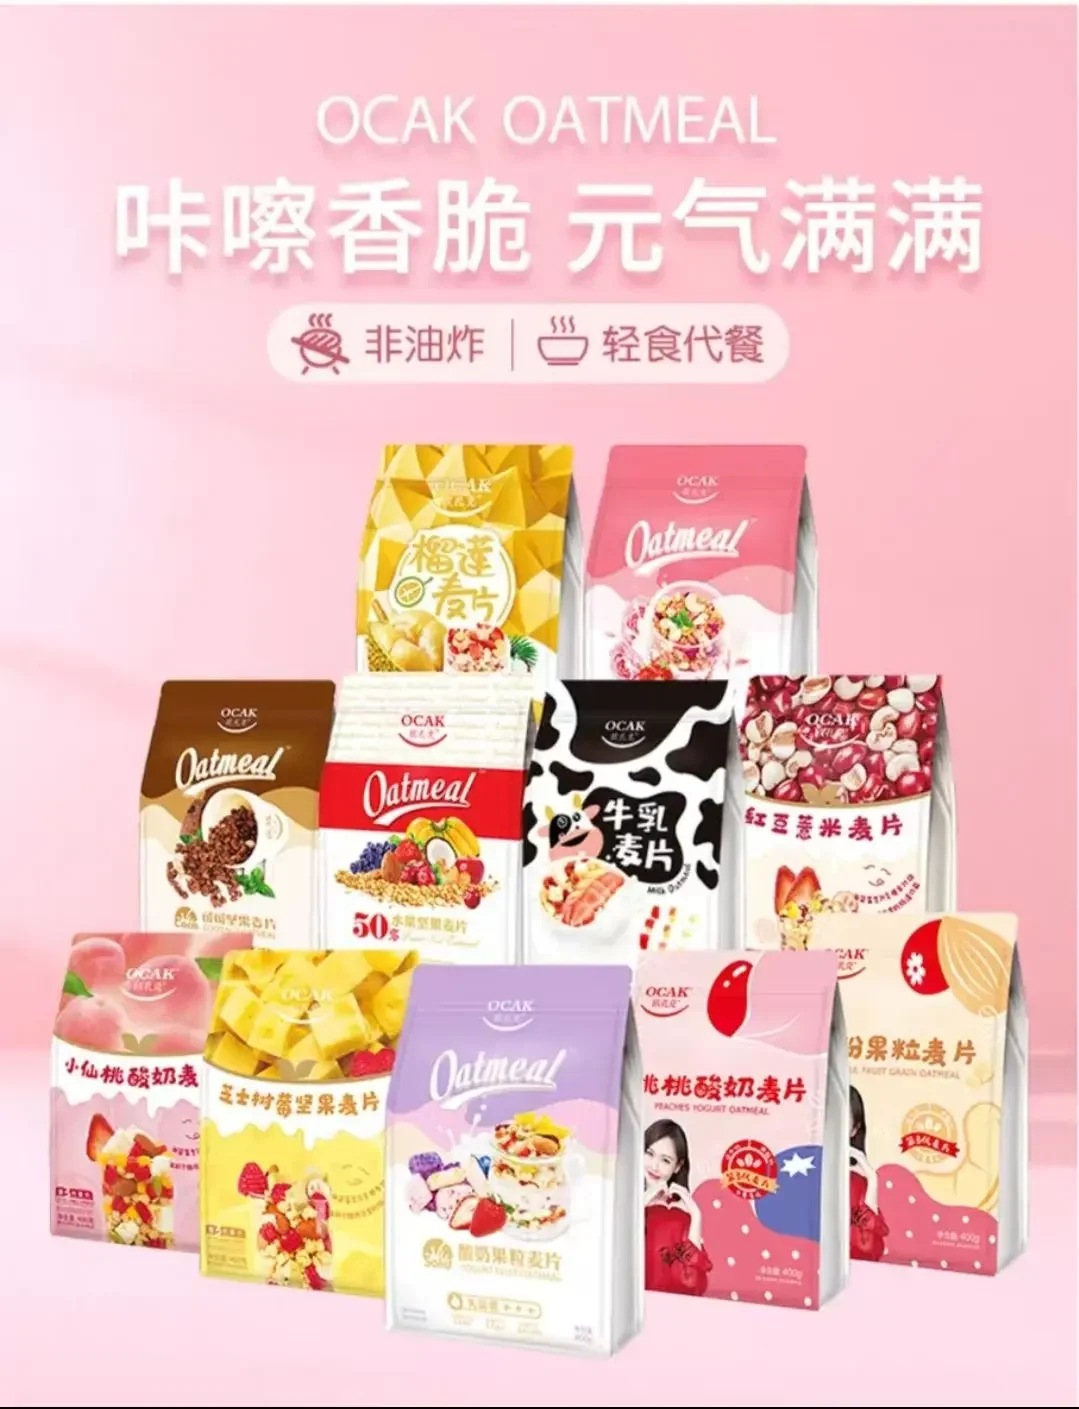 SG STOCK 🧁OCAK oatmeal yogurt fruit cereal 400g 欧扎克酸奶果粒麦片400g